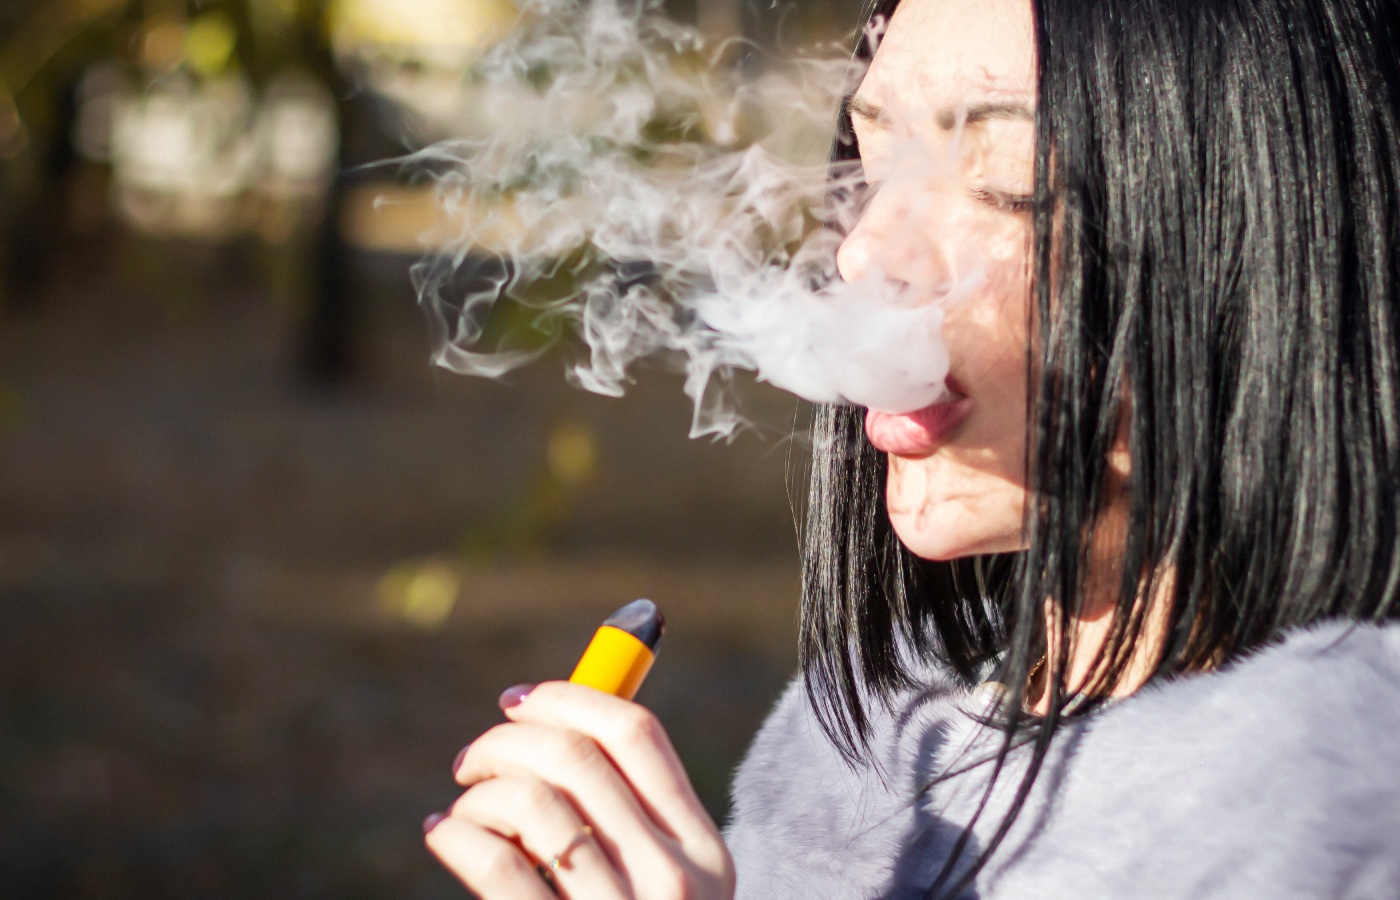 The girl smokes an electronic cigarette on the street.
vape vaping teenage